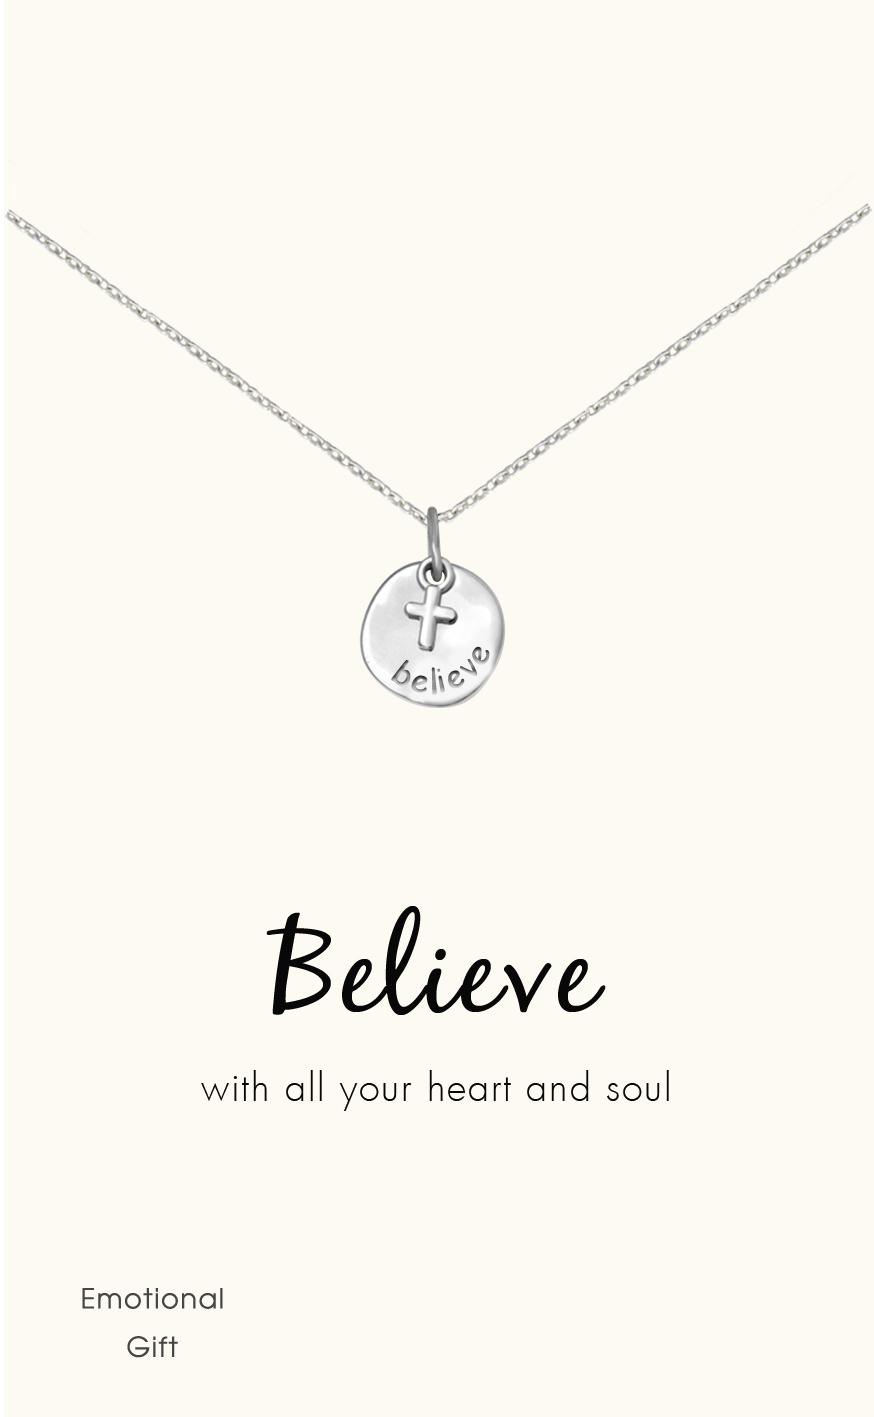 The Believe cross silver pendant